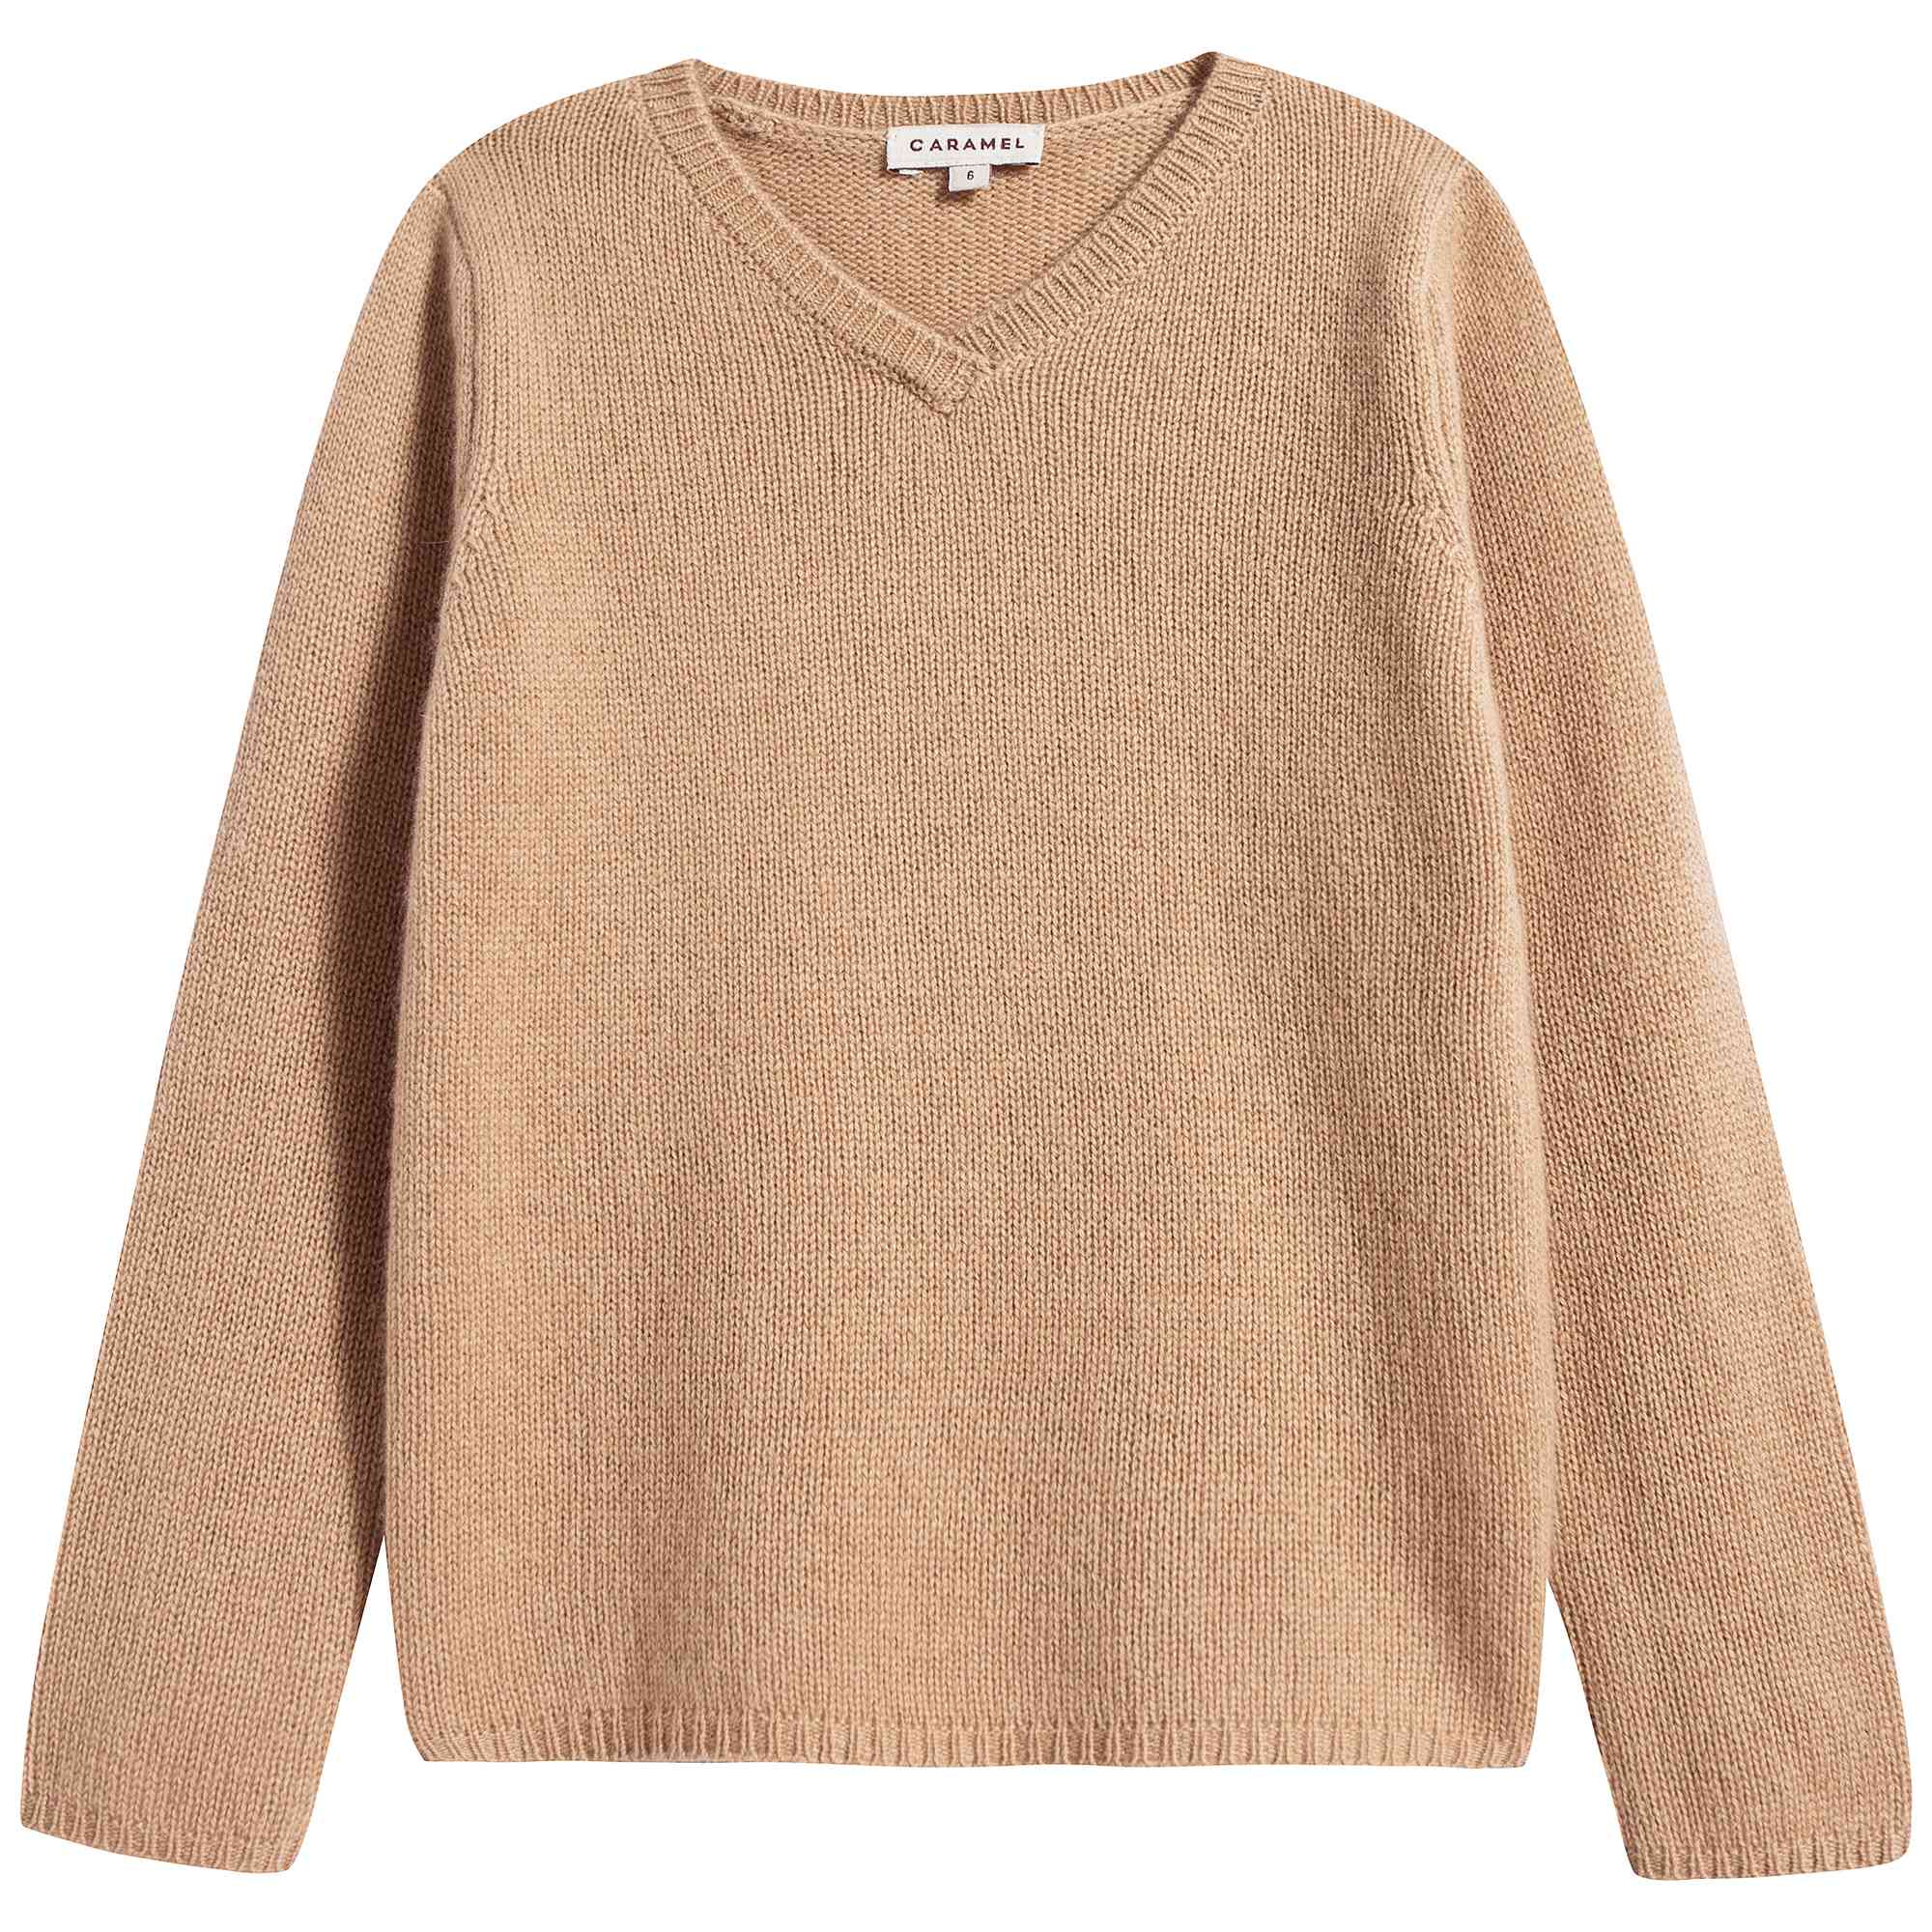 Girls Camel Cashmere Sweater